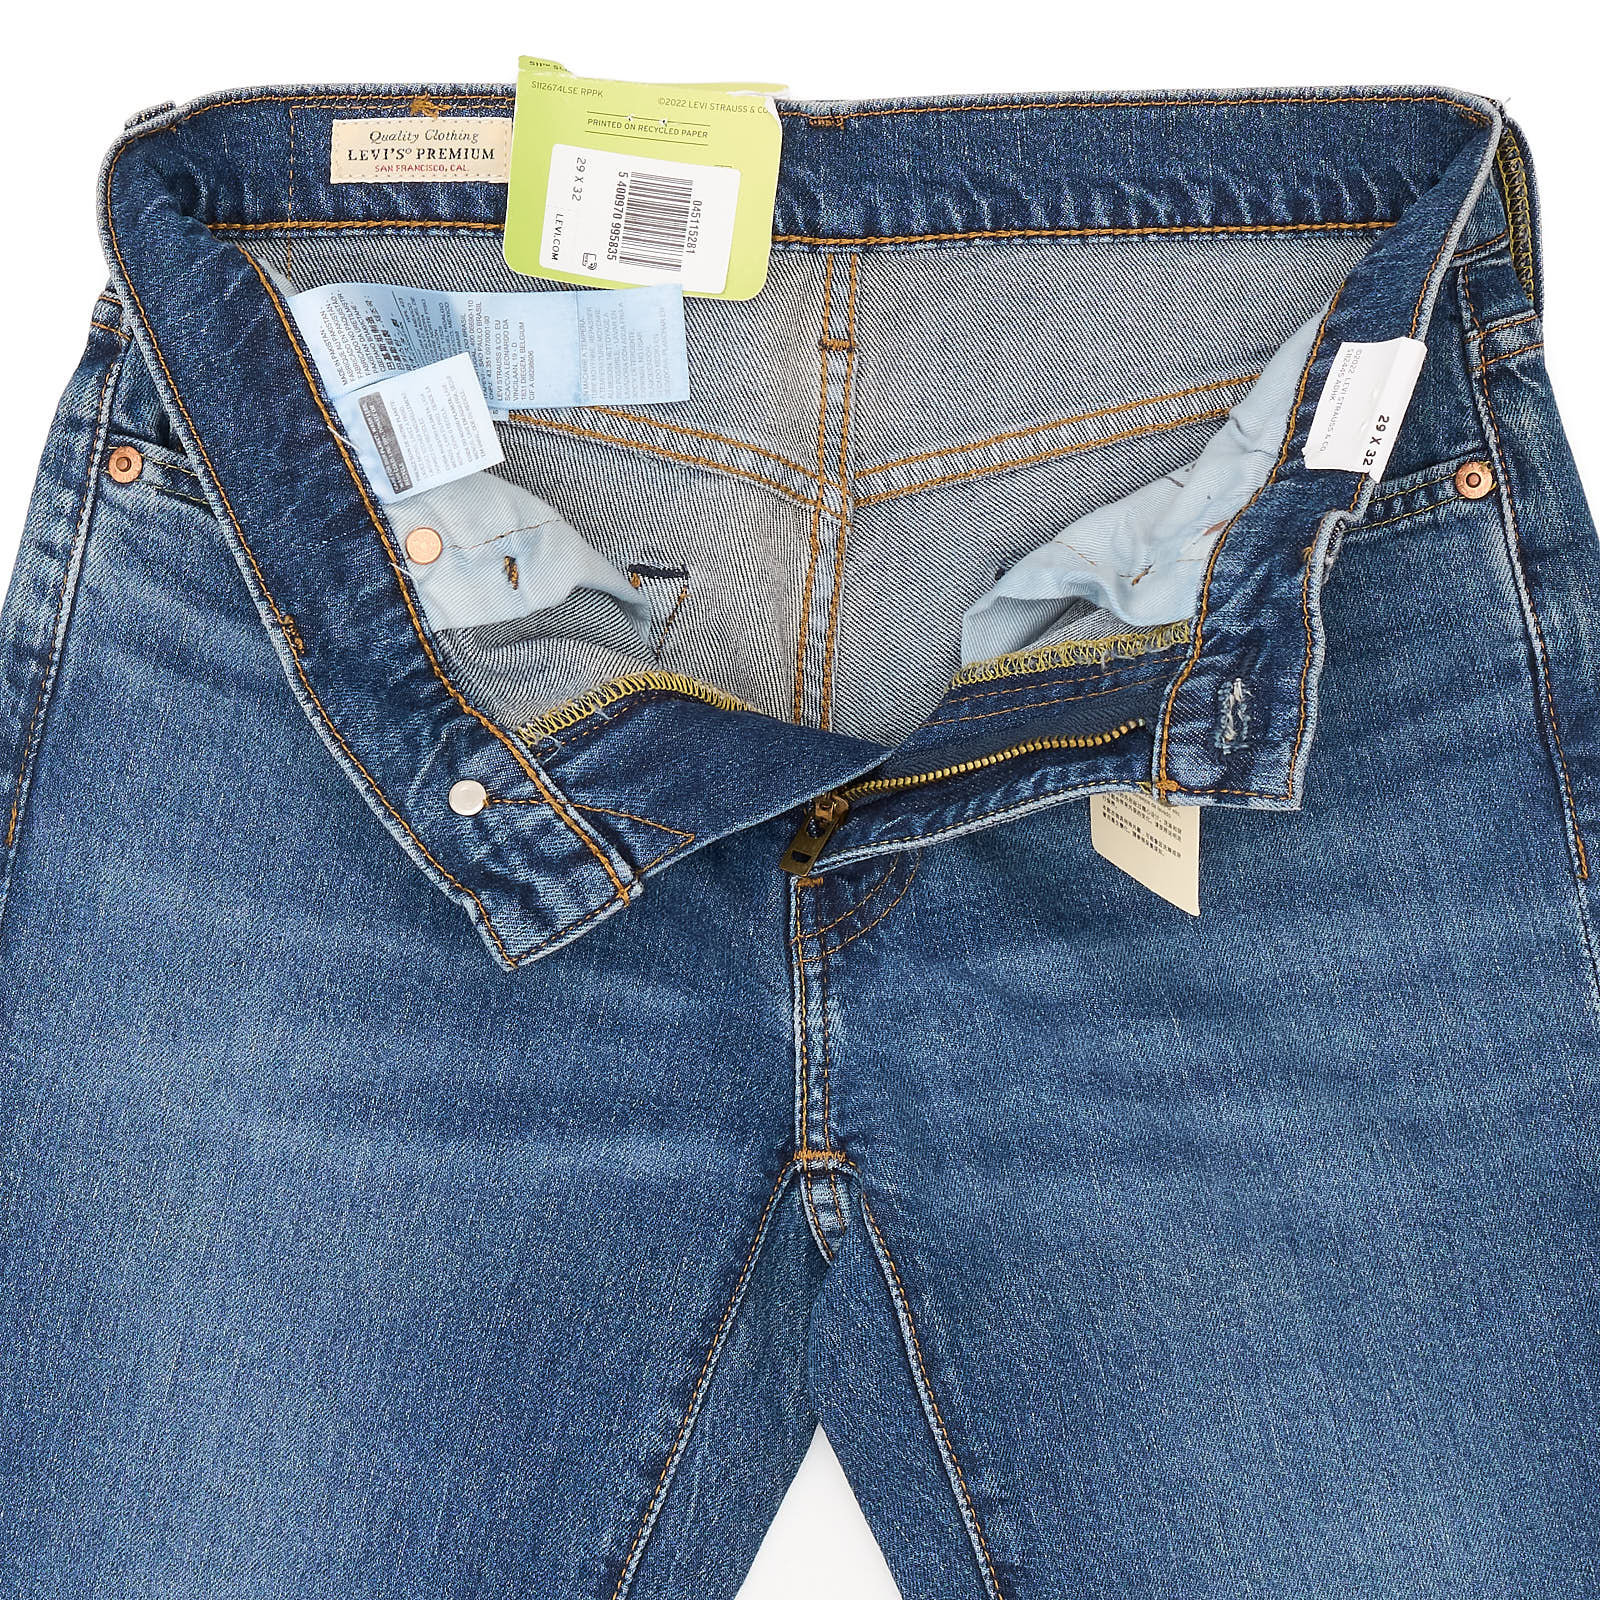 LEVI'S Premium 511 Slim Flex Eco Performance Lyocell Big E Jeans NEW W29 L32